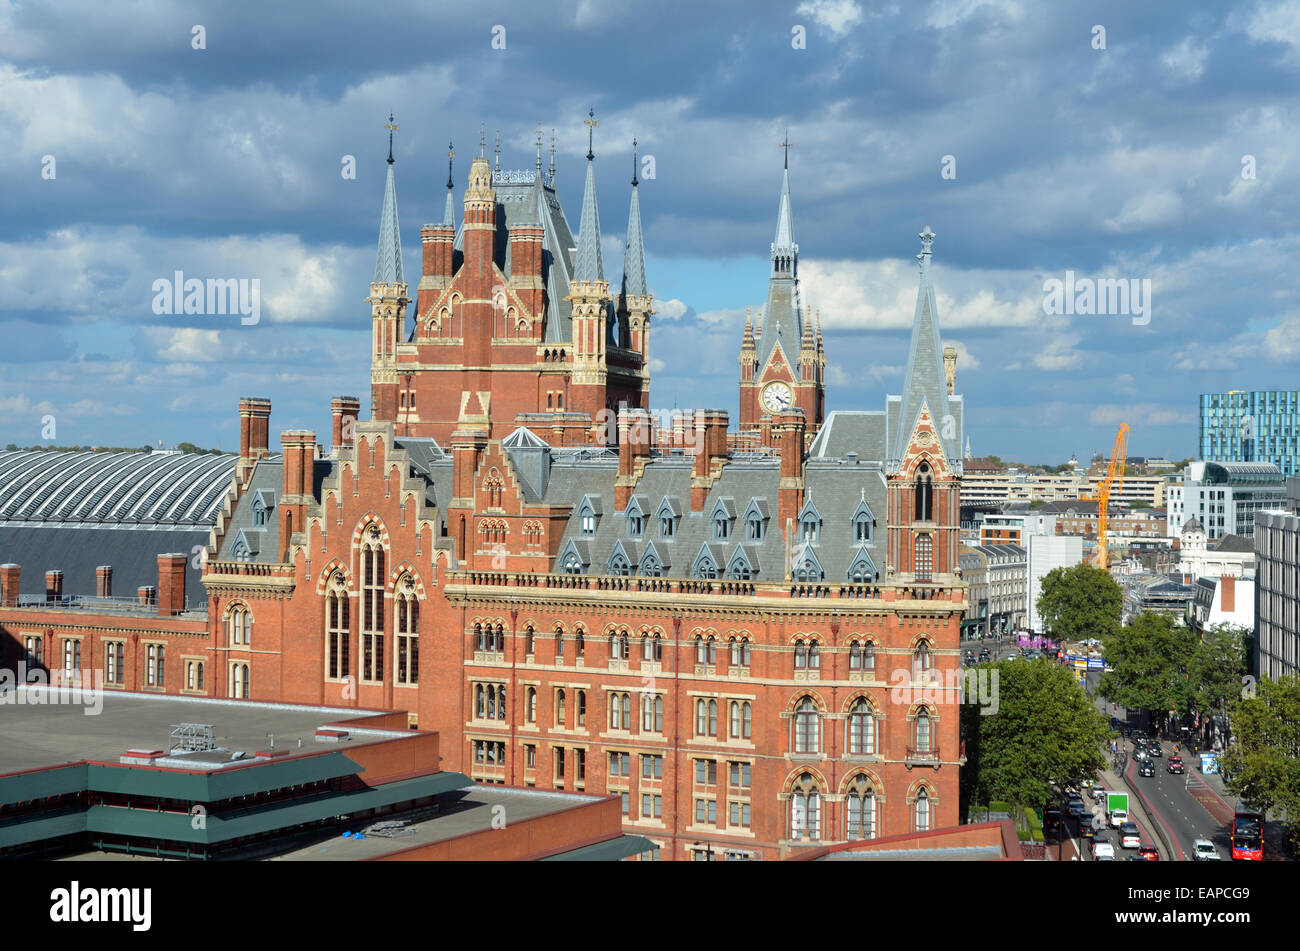 St. Pancras Train Station and Hotel, London, England, UK, Europe Stock Photo